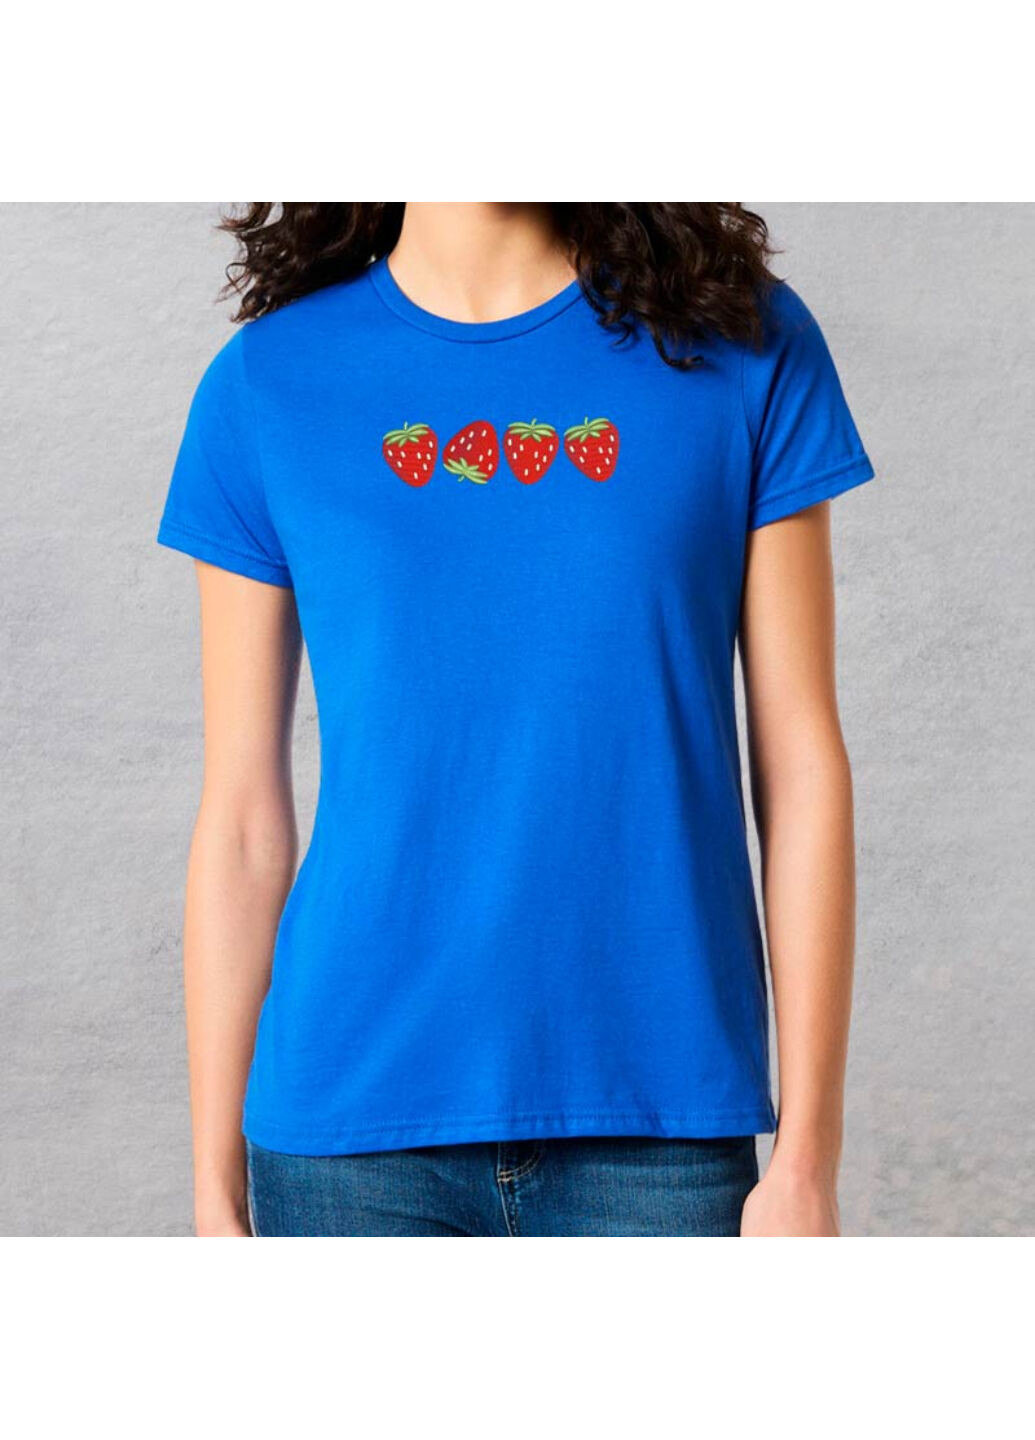 Синяя футболка з вишивкою полуничка 02-1 женская синий m No Brand